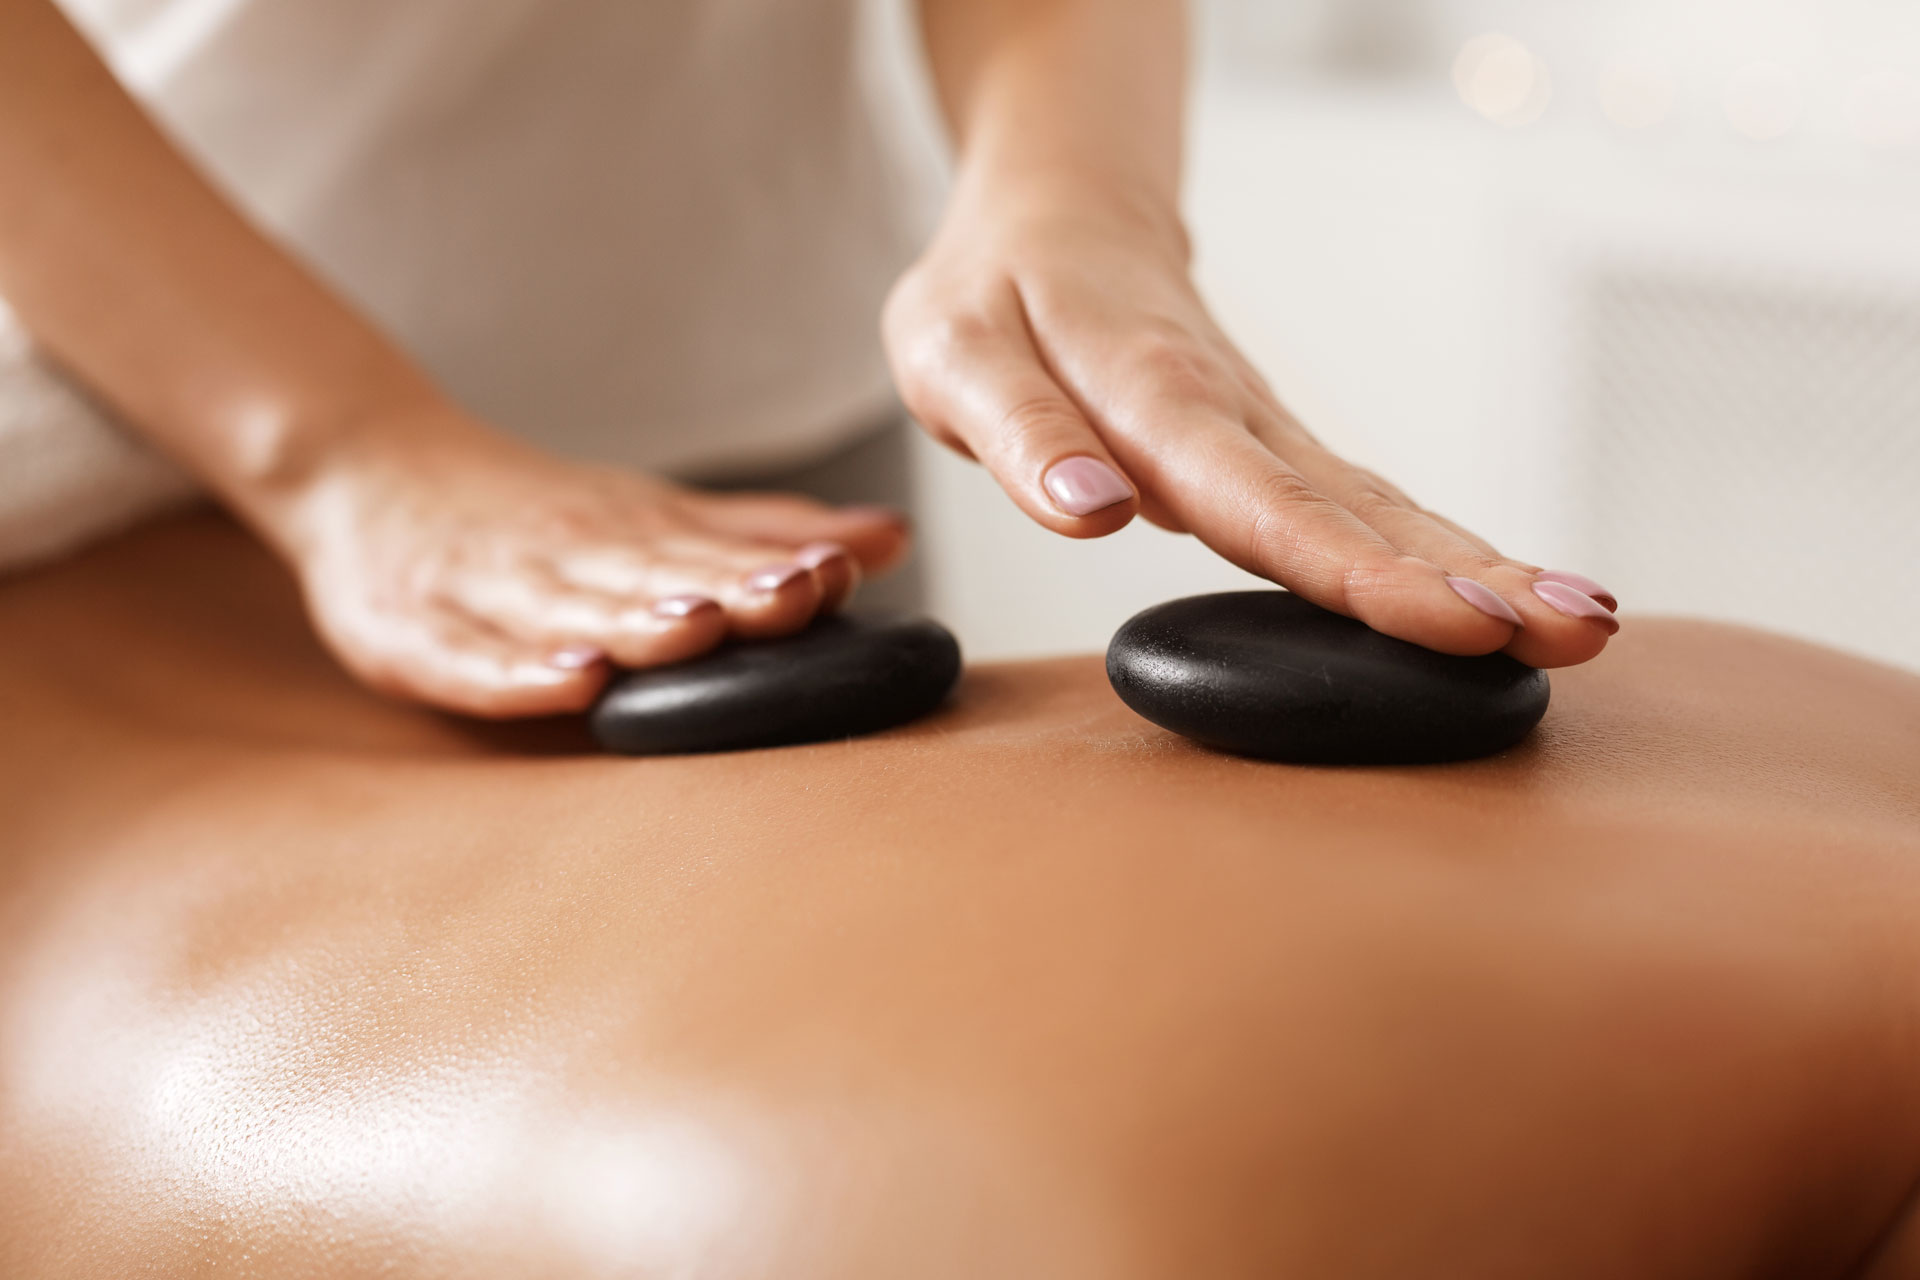 masseur-doing-back-hot-stone-massage-closeup-4NALQE2.jpg